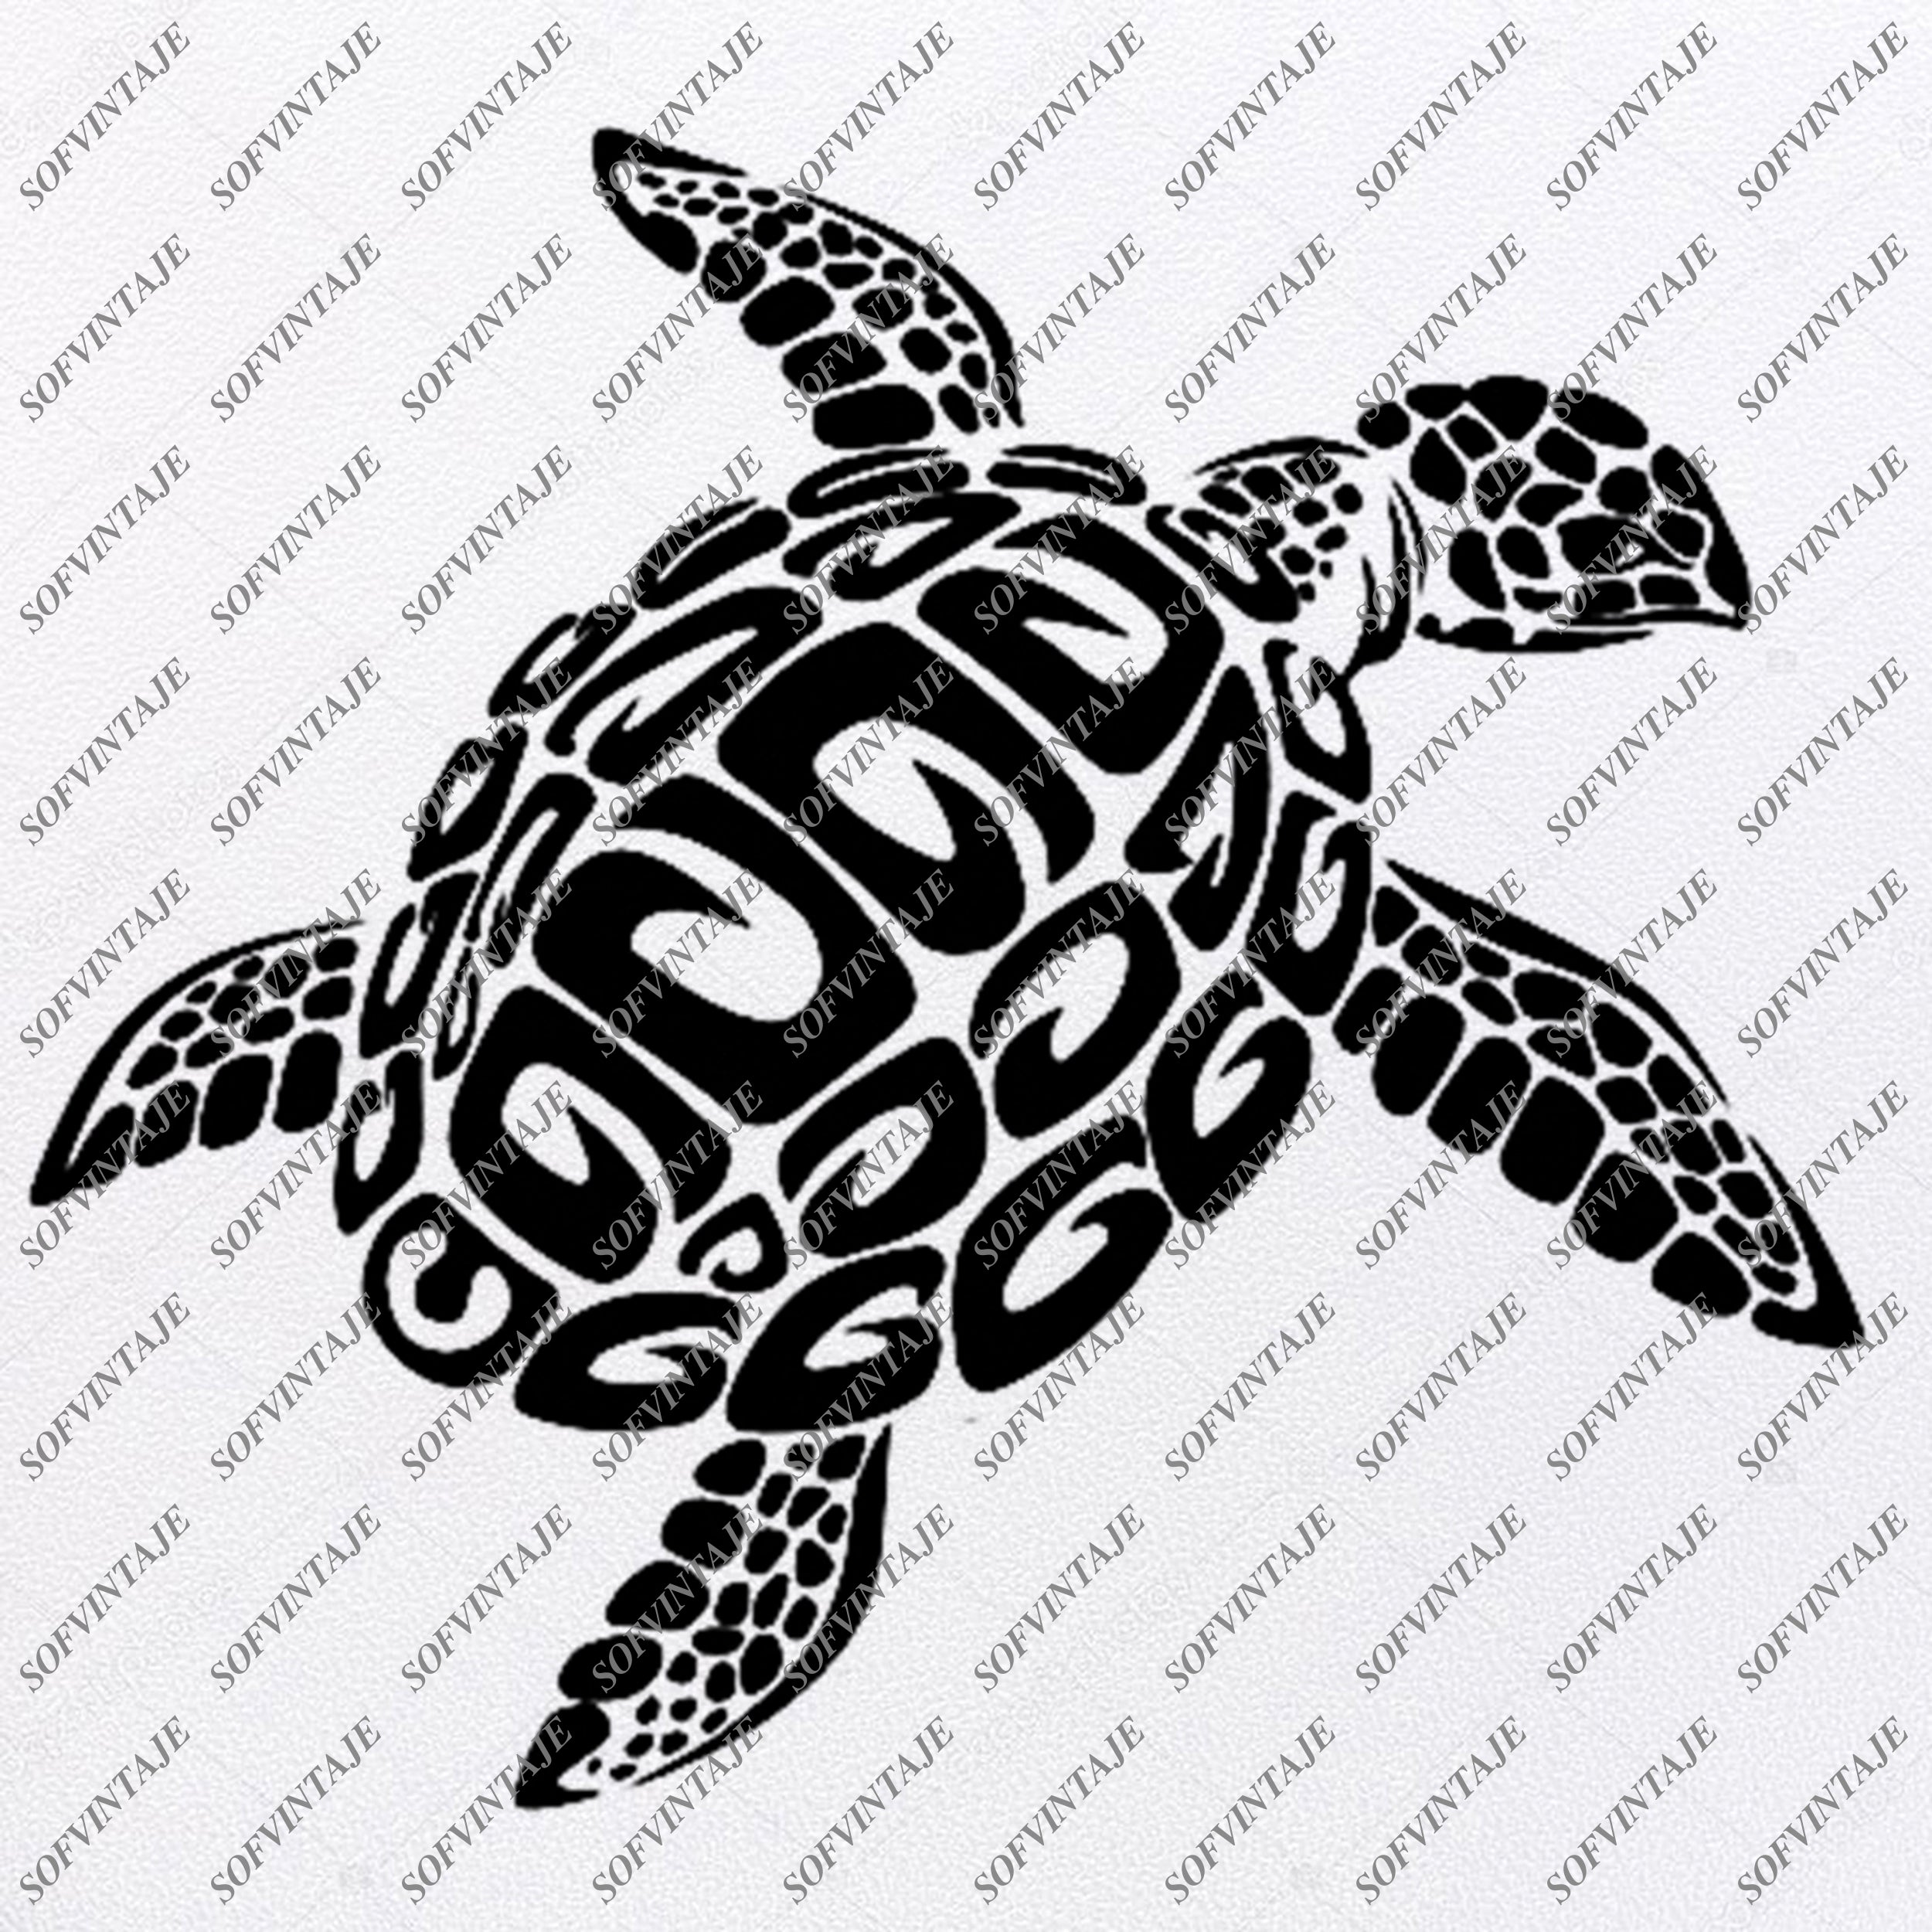 Download 32+ Free Sea Turtle Svg File Background Free SVG files ...